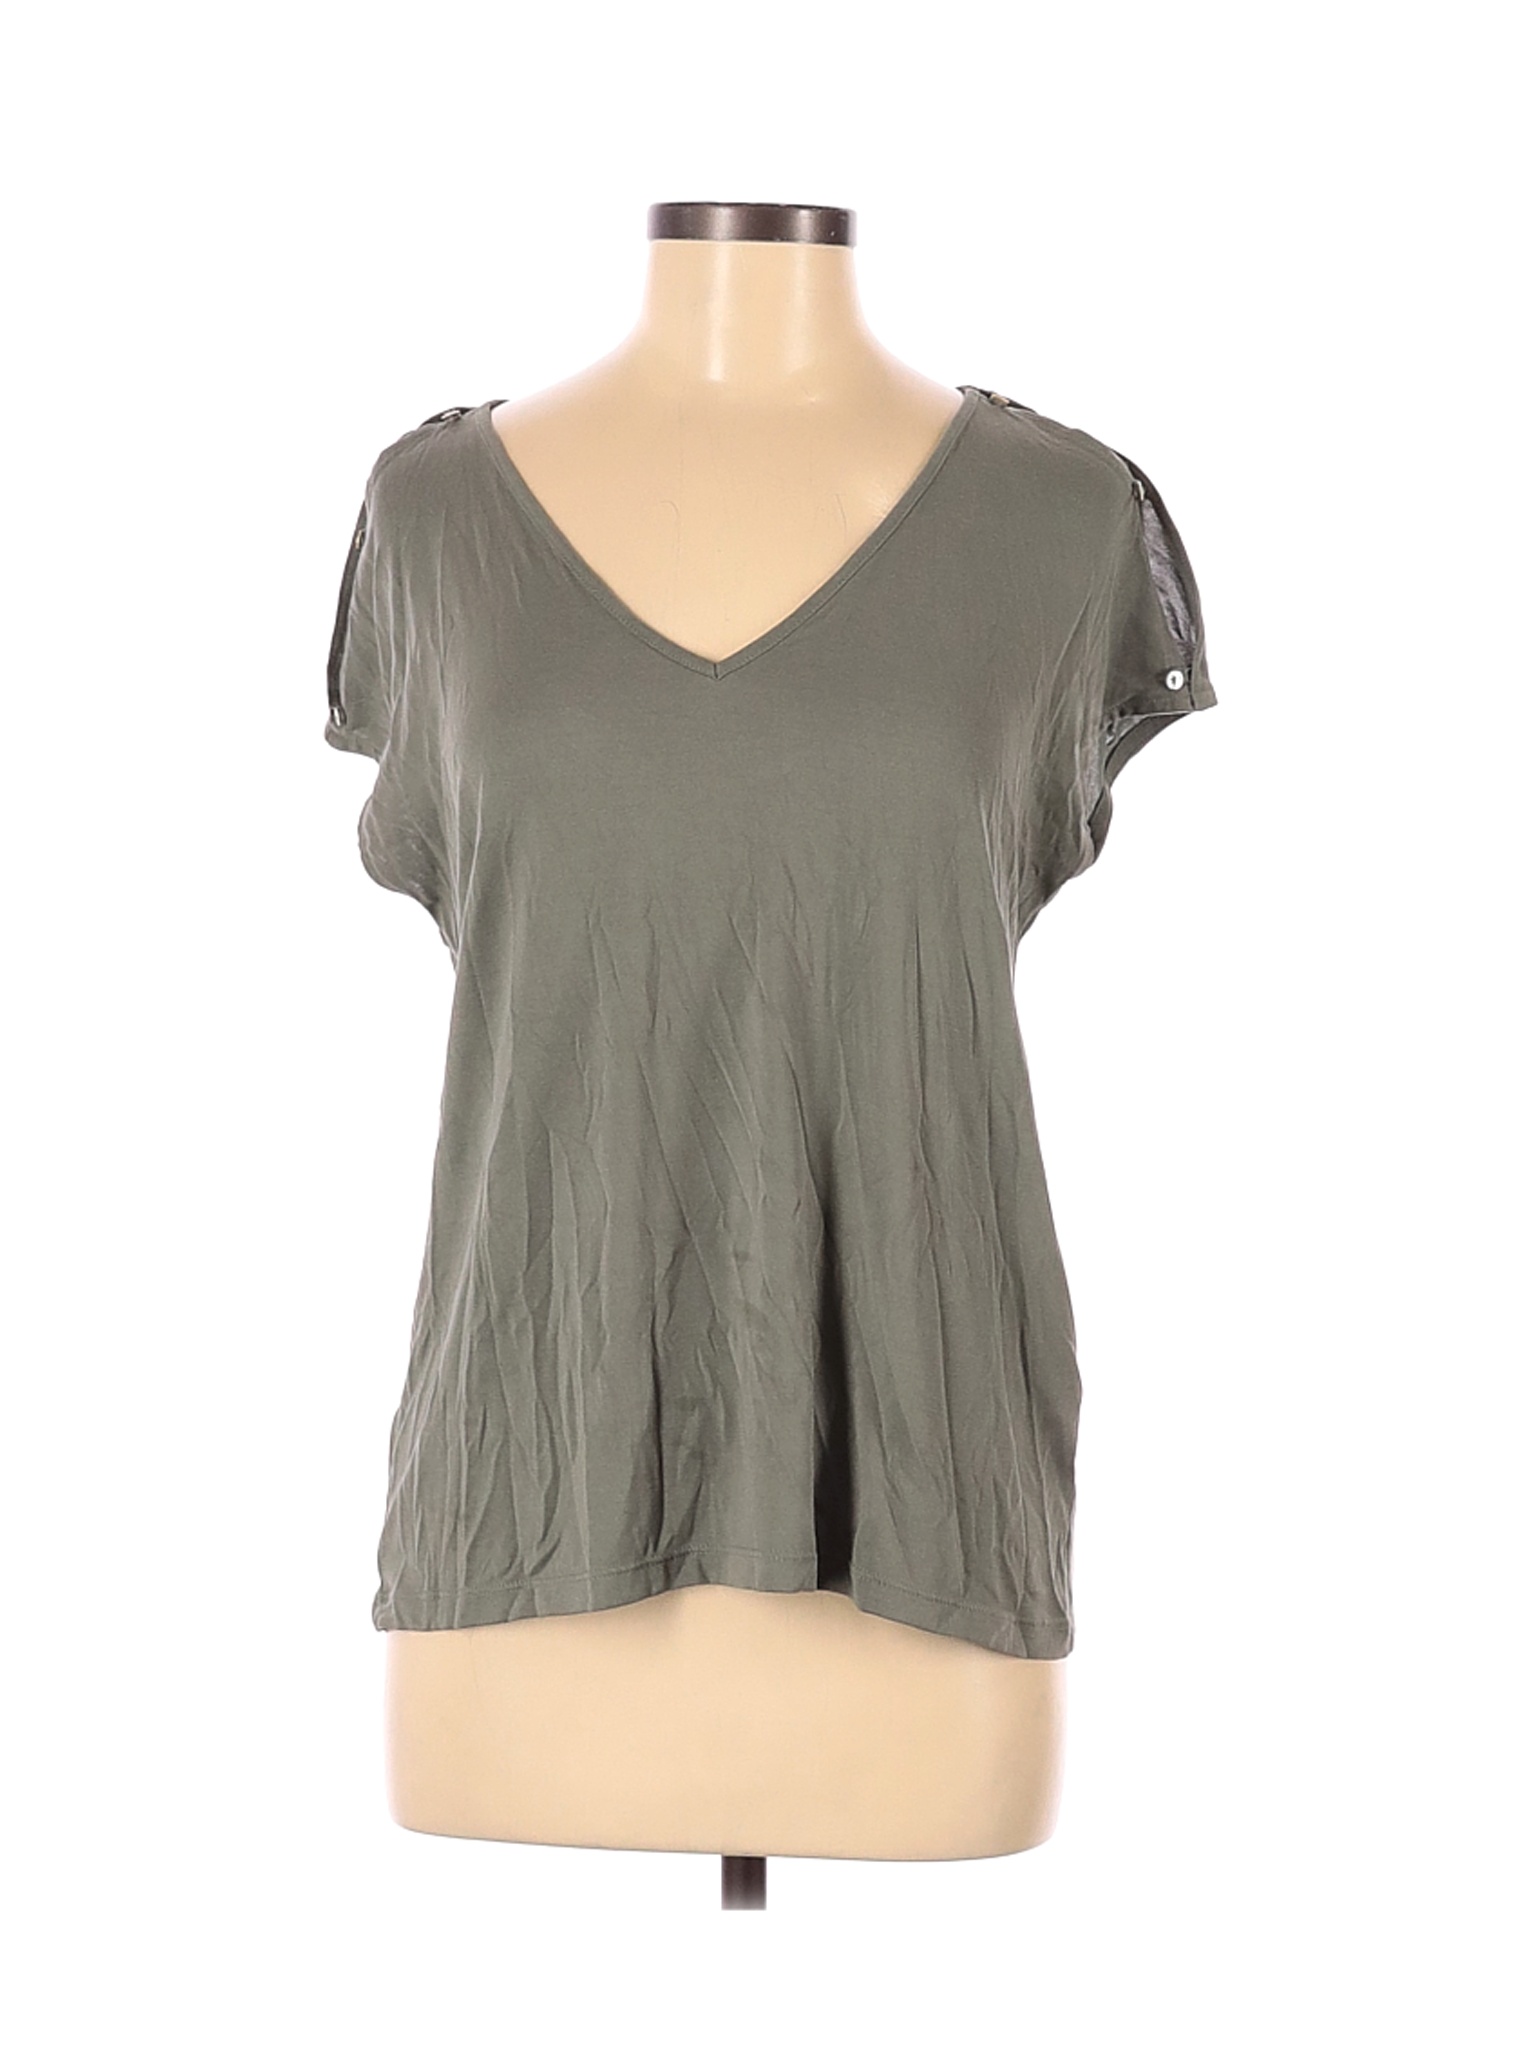 Lucky Brand Women Gray Short Sleeve Top S | eBay